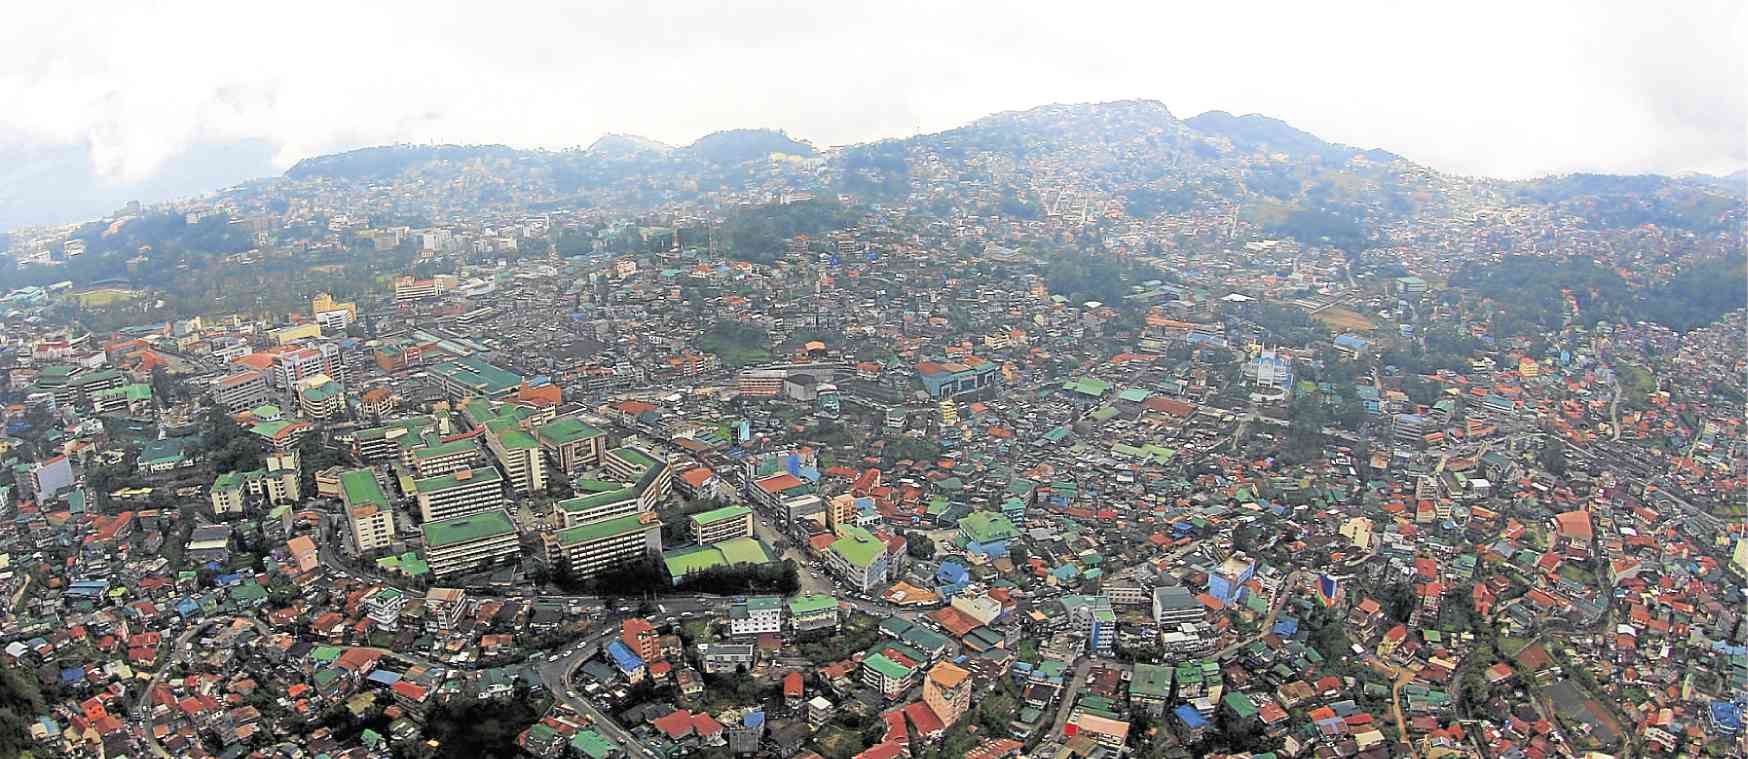 In Baguio, land sales, danger zones reviewed amid boom